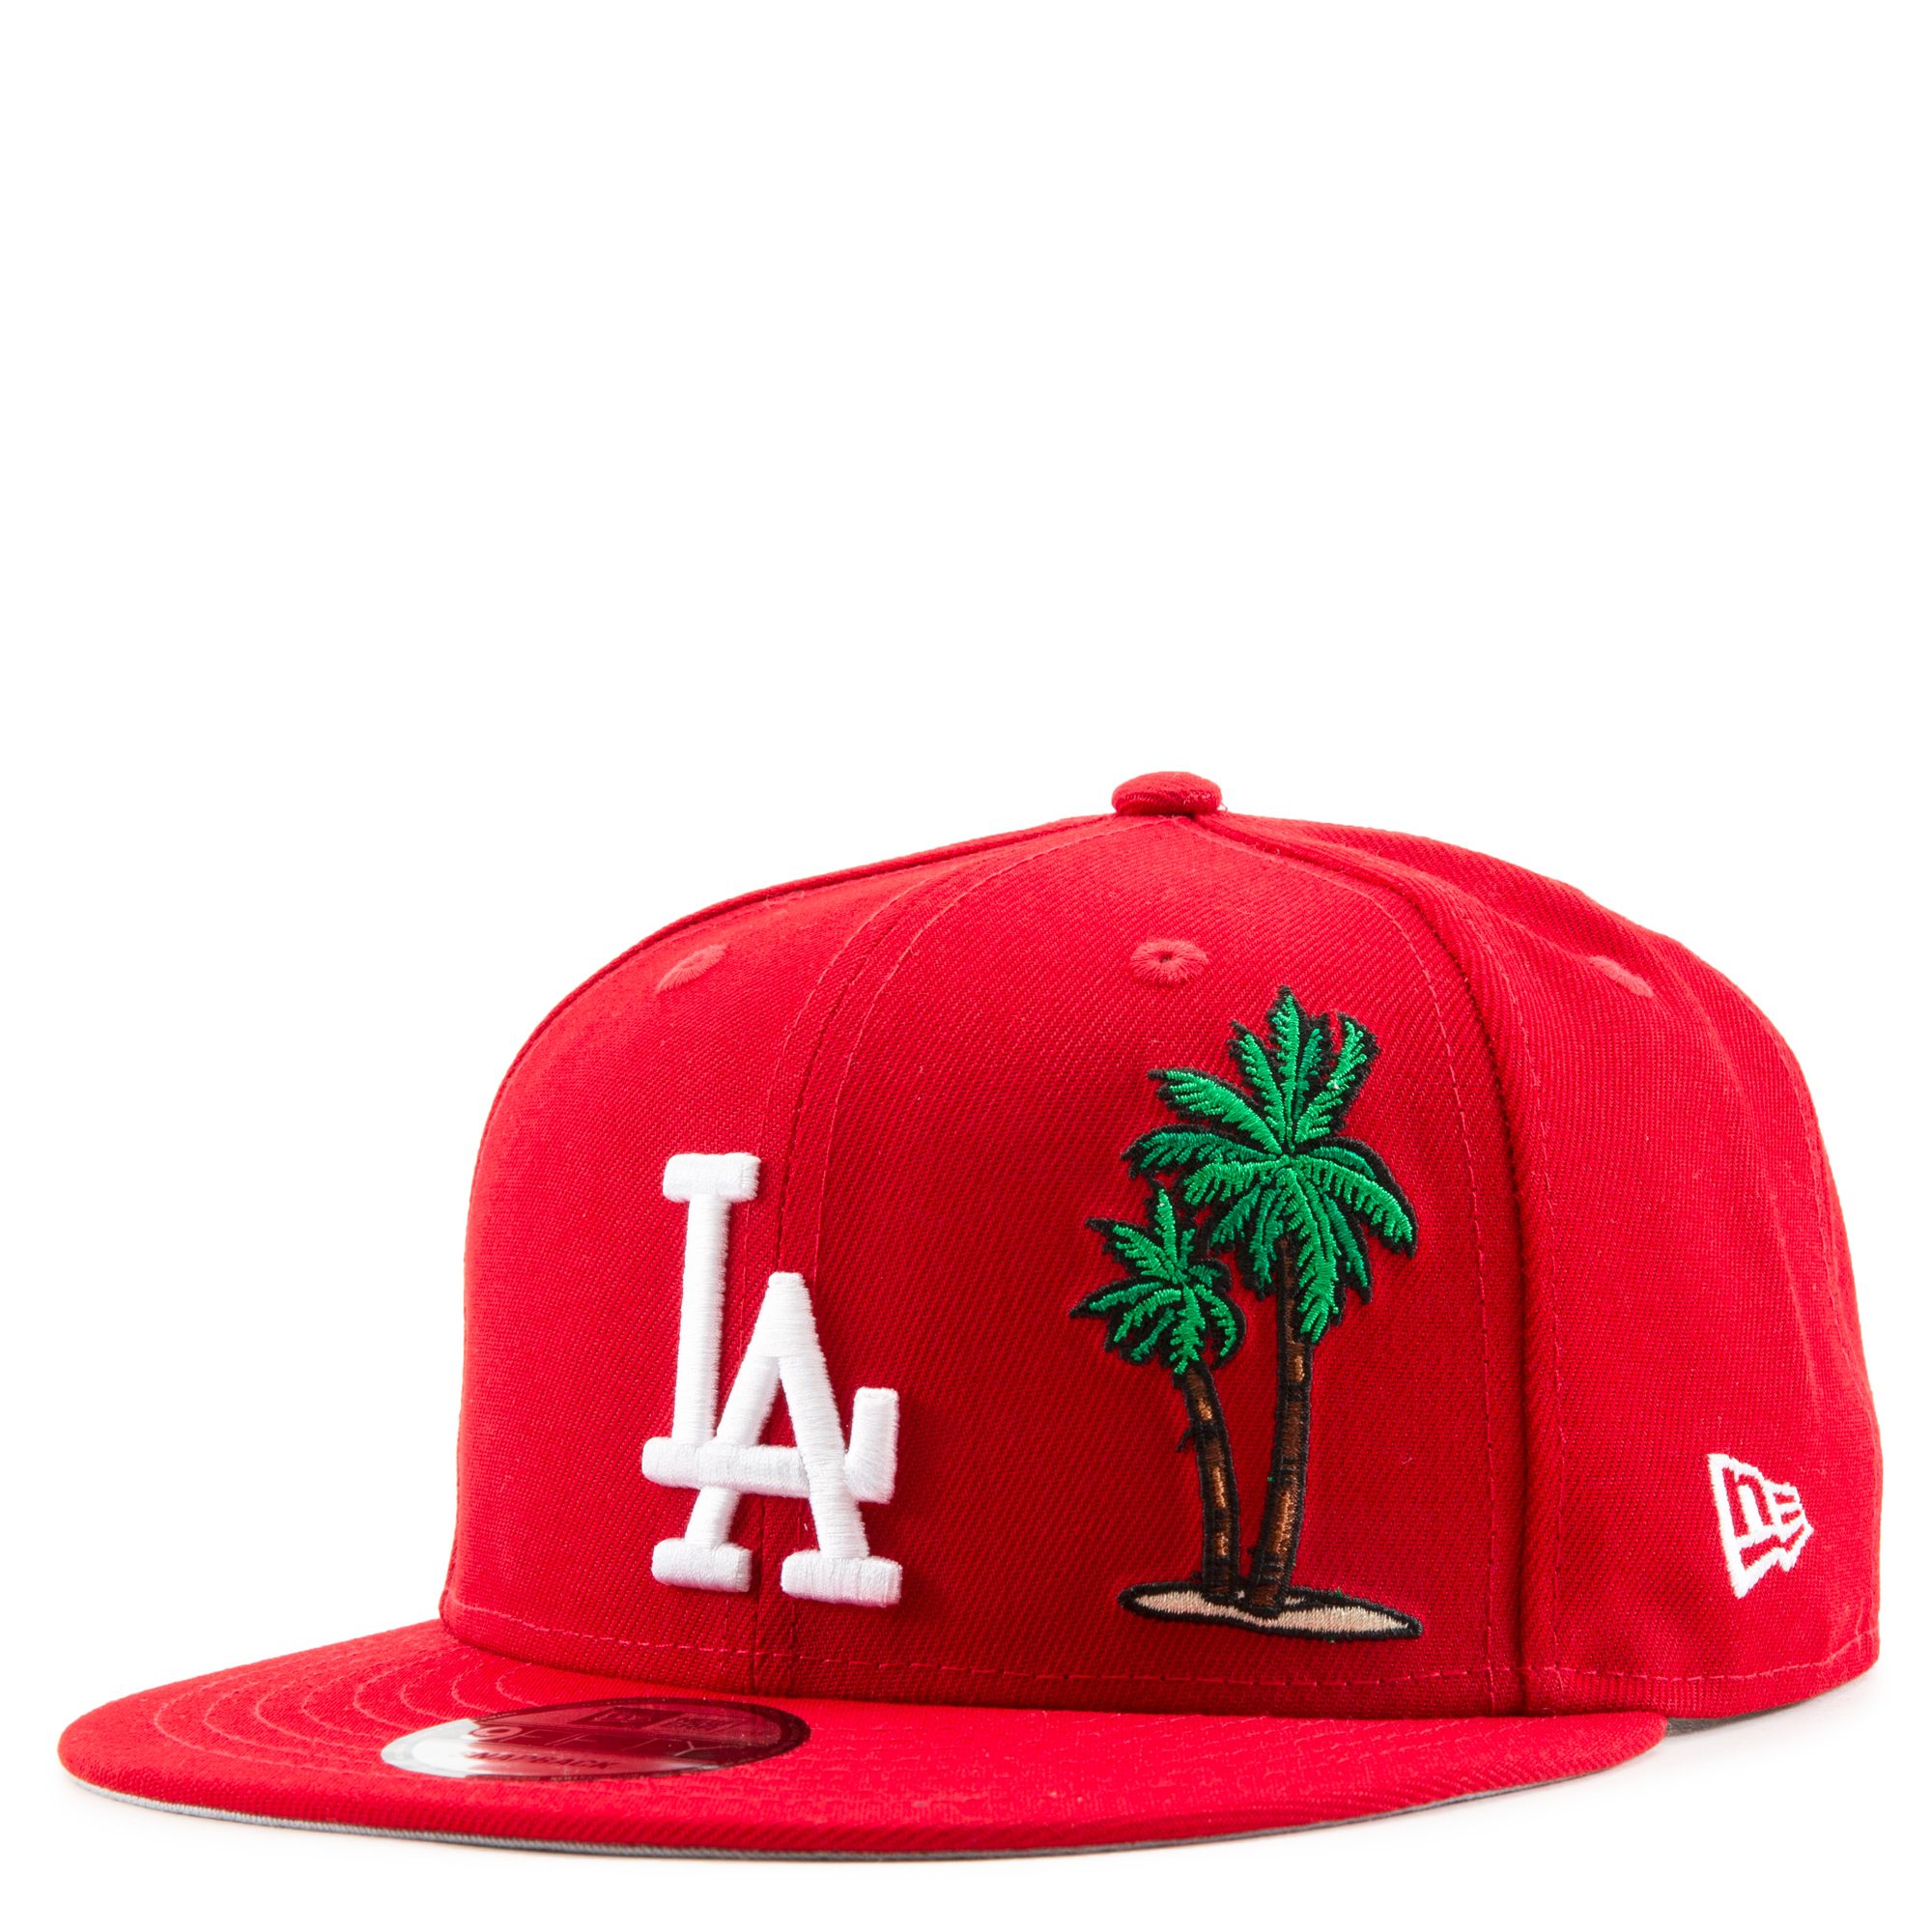 La hat. Кепка красная los Angeles. Детали бейсболки. Бейсболка Palm Harbor. New era la Palm cap.